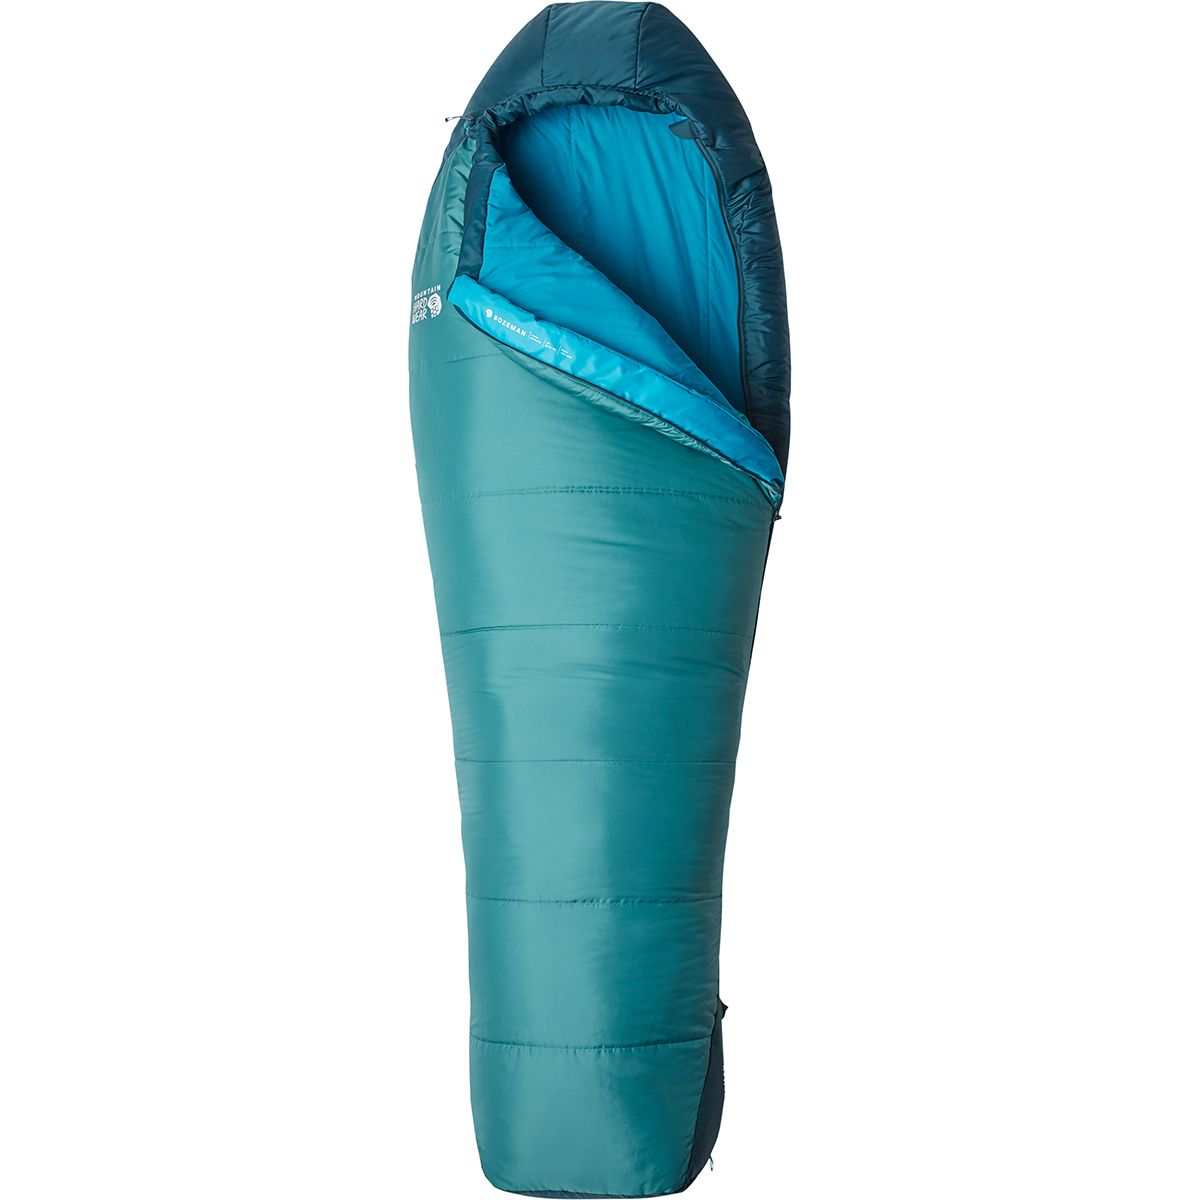 Mountain Hardwear Bozeman 30 Sleeping Bag: 30F Synthetic